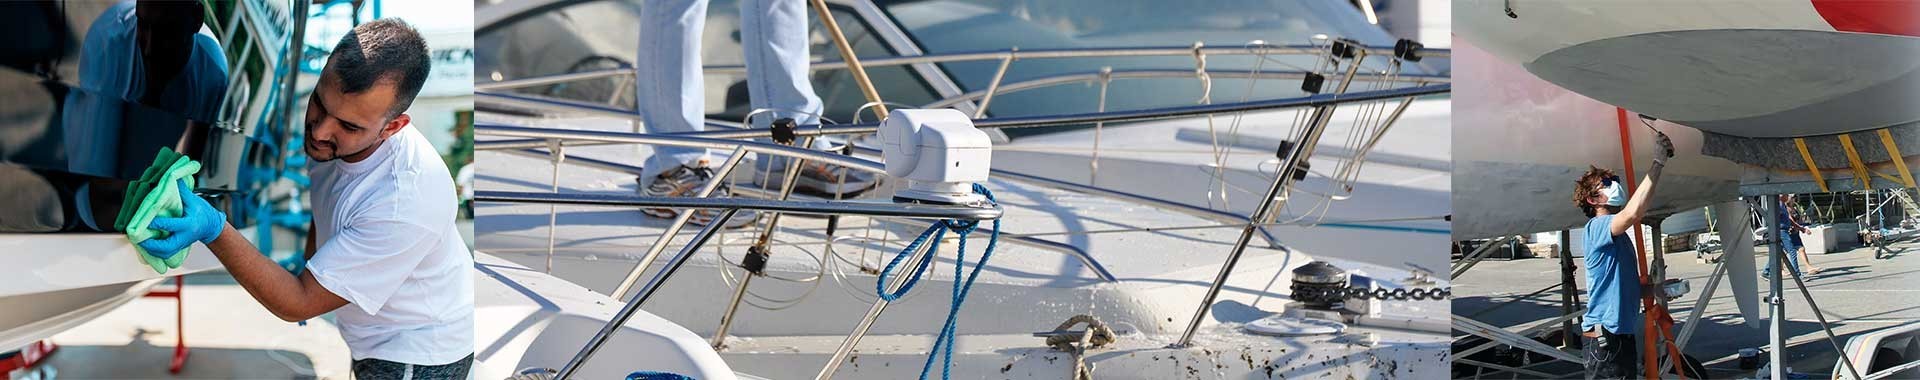 Glue, sealant and boat waterproofing - Comptoir Nautique